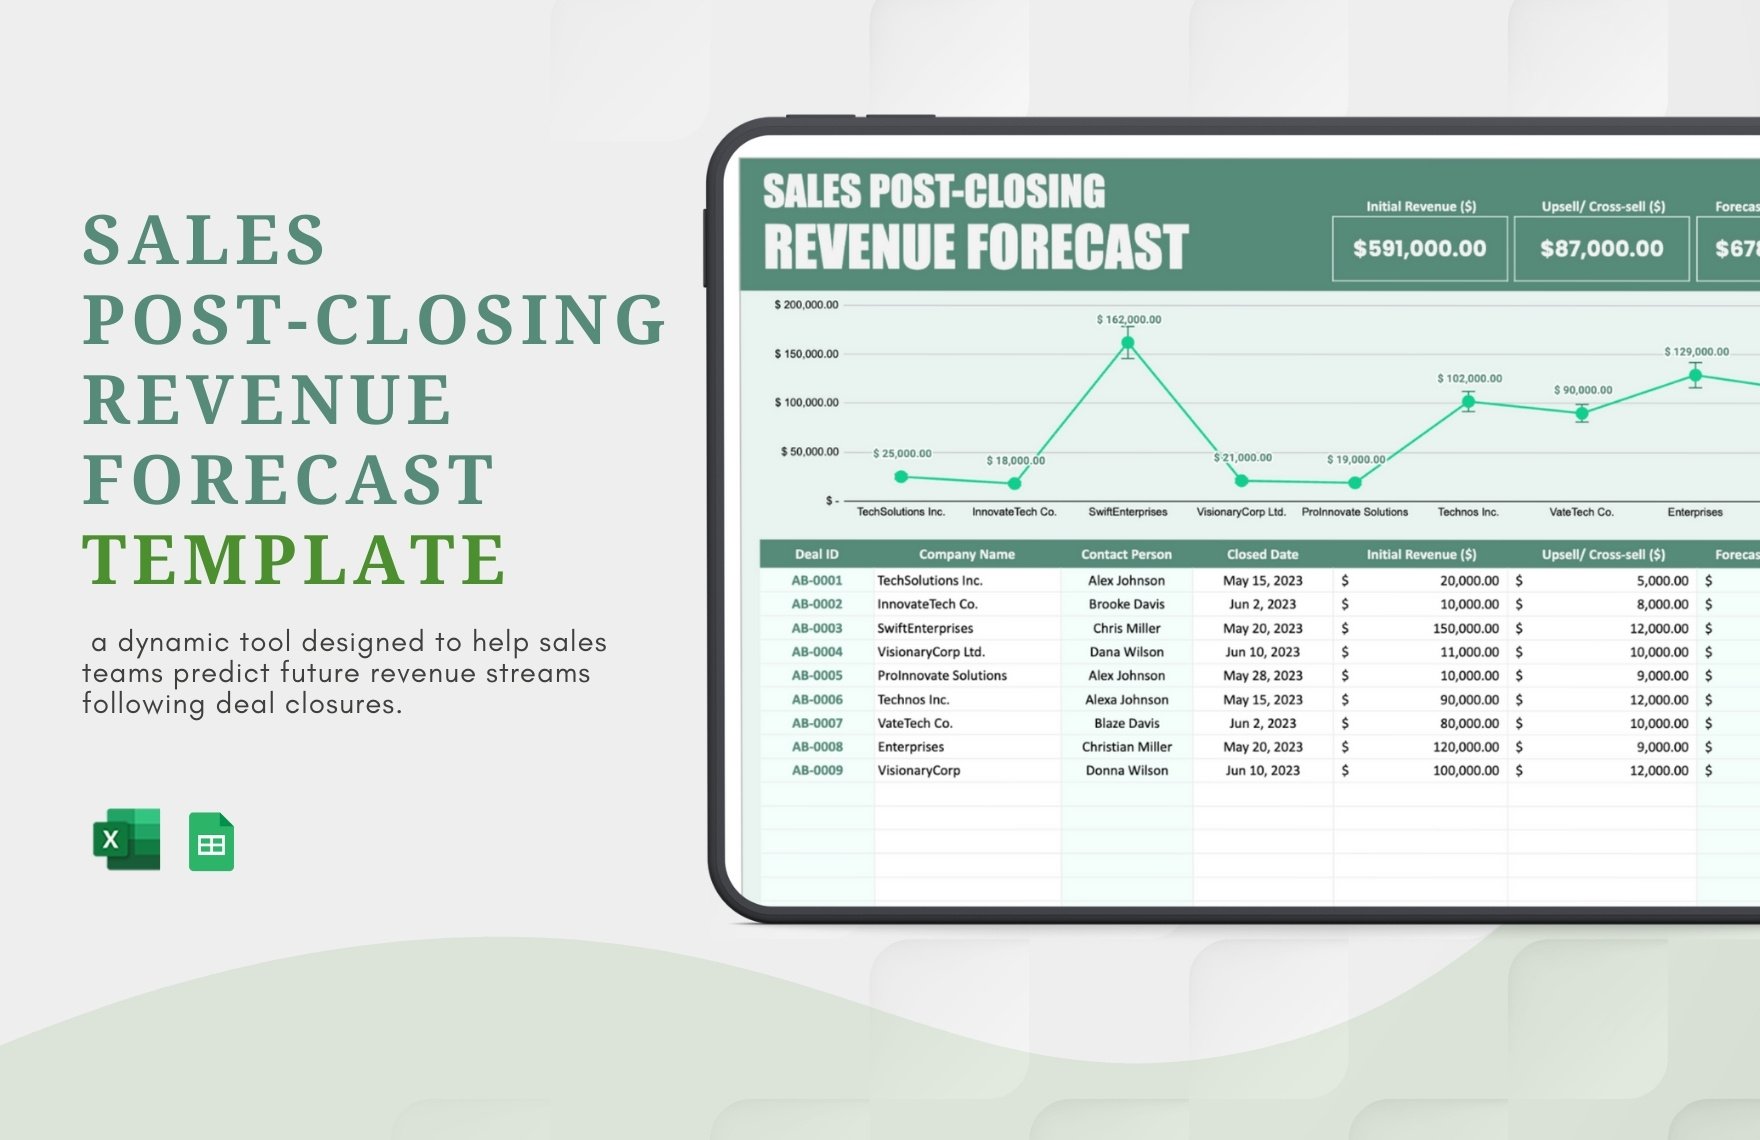 Sales Post-Closing Revenue Forecast Template